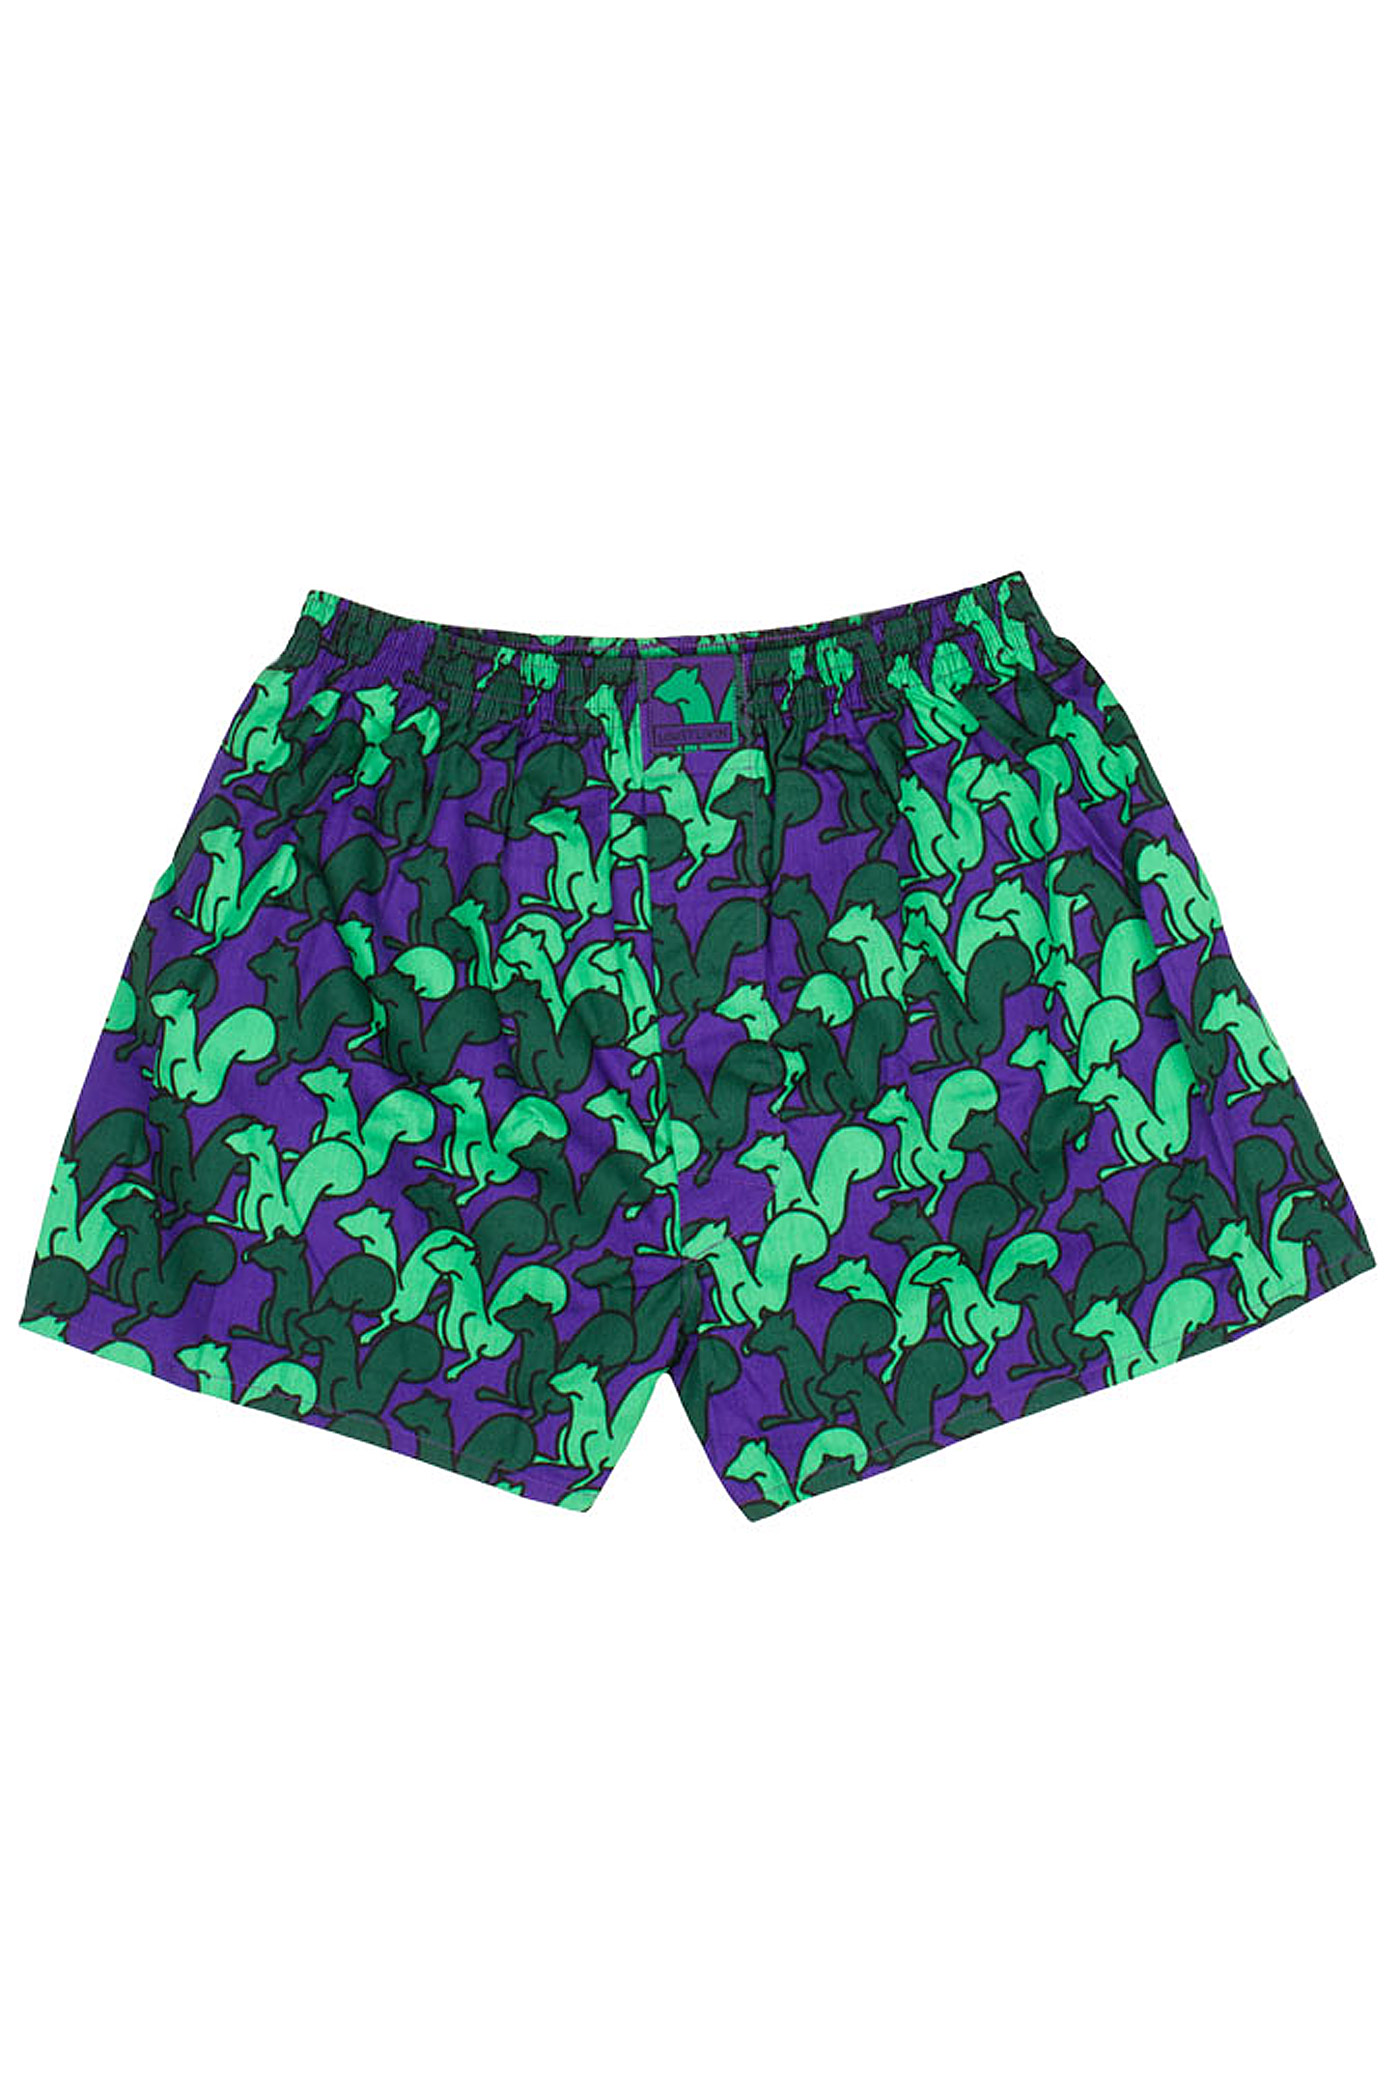 Lousy Livin Underwear Horn Boxershorts (purple) buy at skatedeluxe